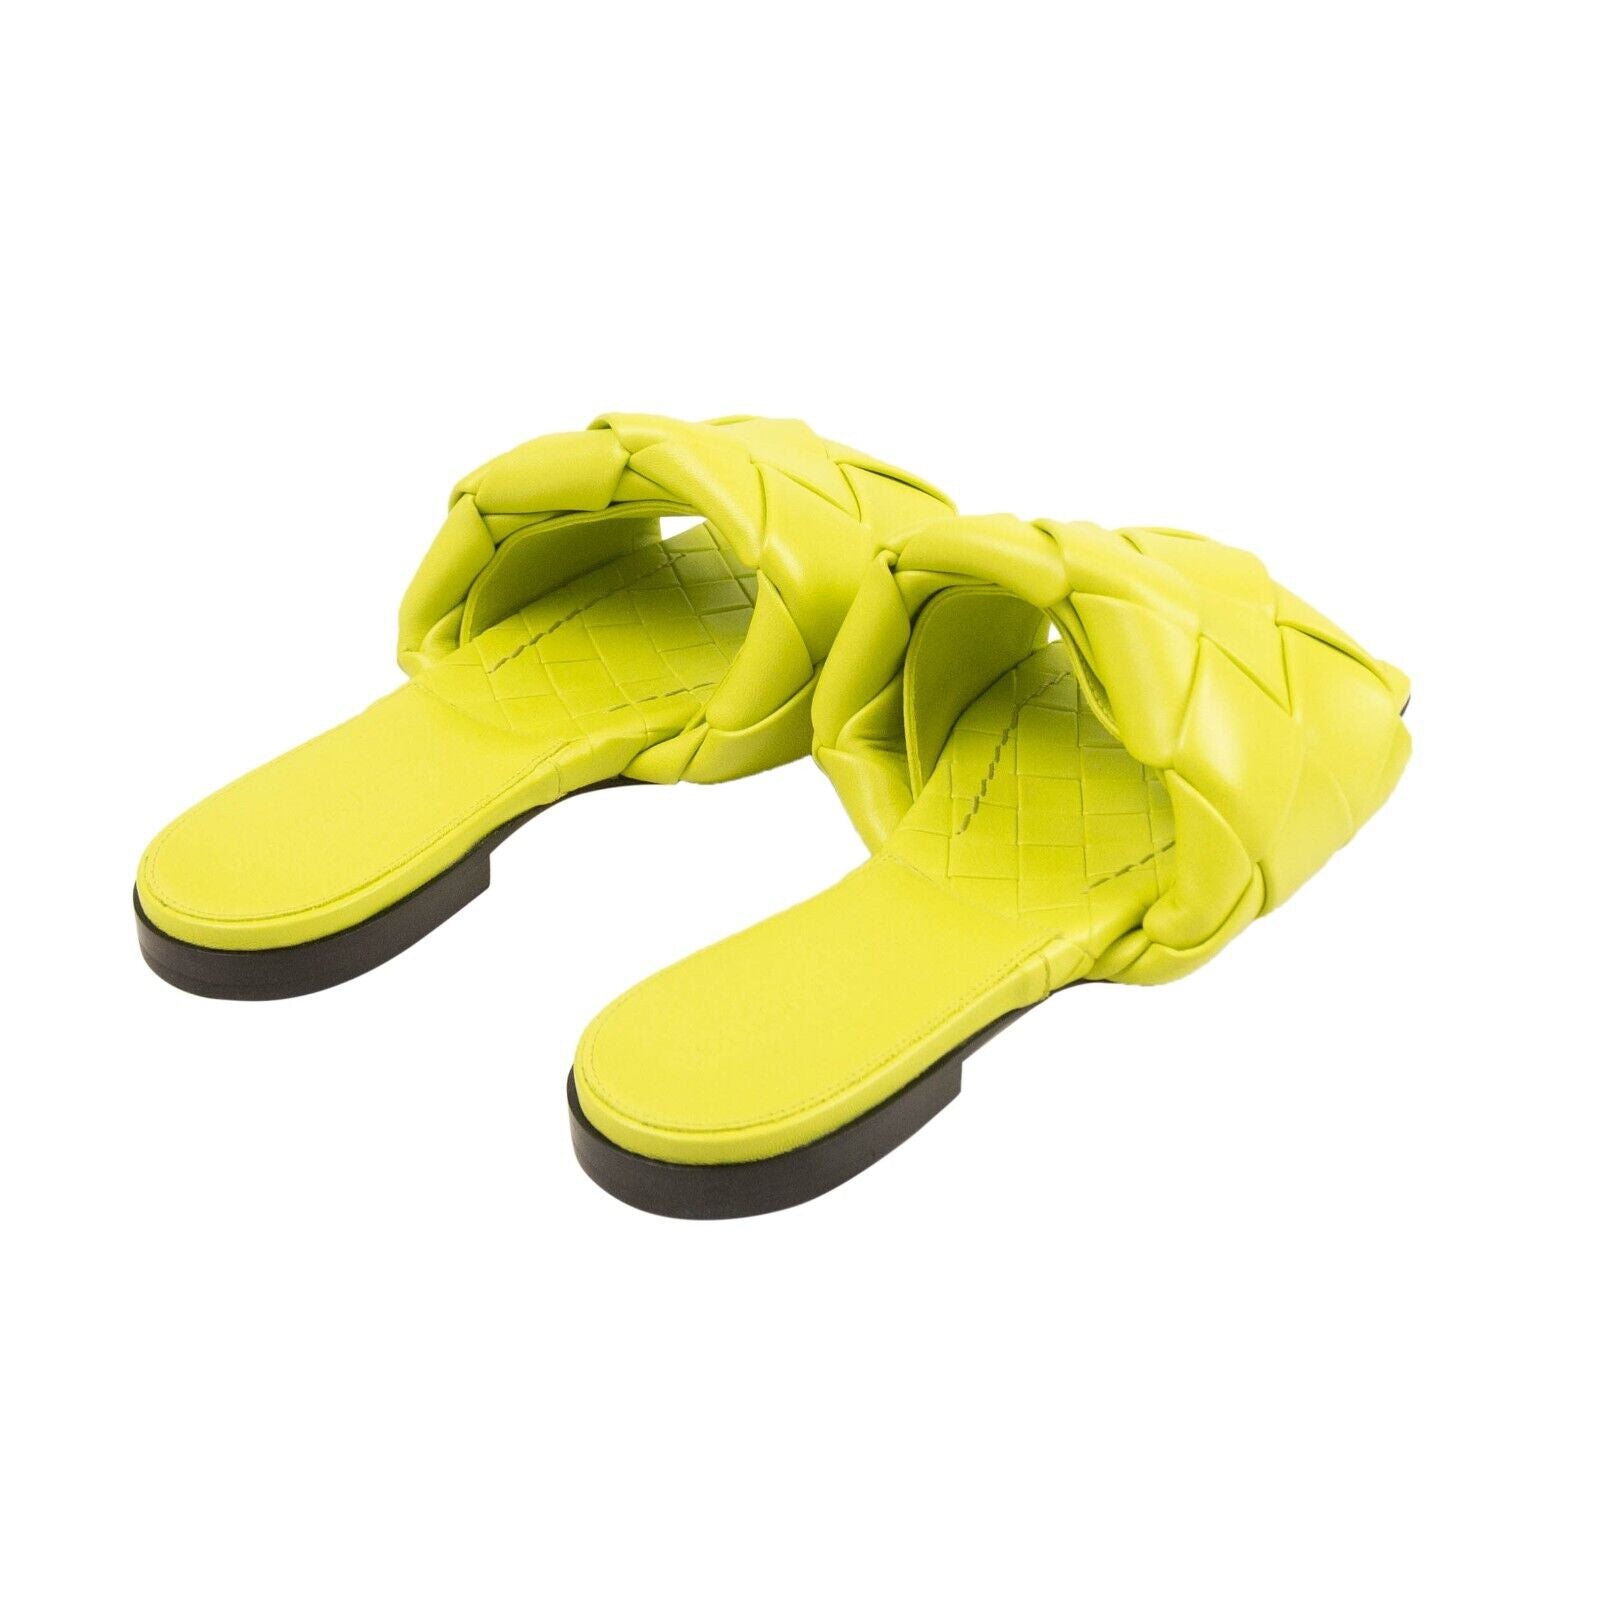 Bottega Veneta Woven Lido Flat Sandals - Kiwi Yellow